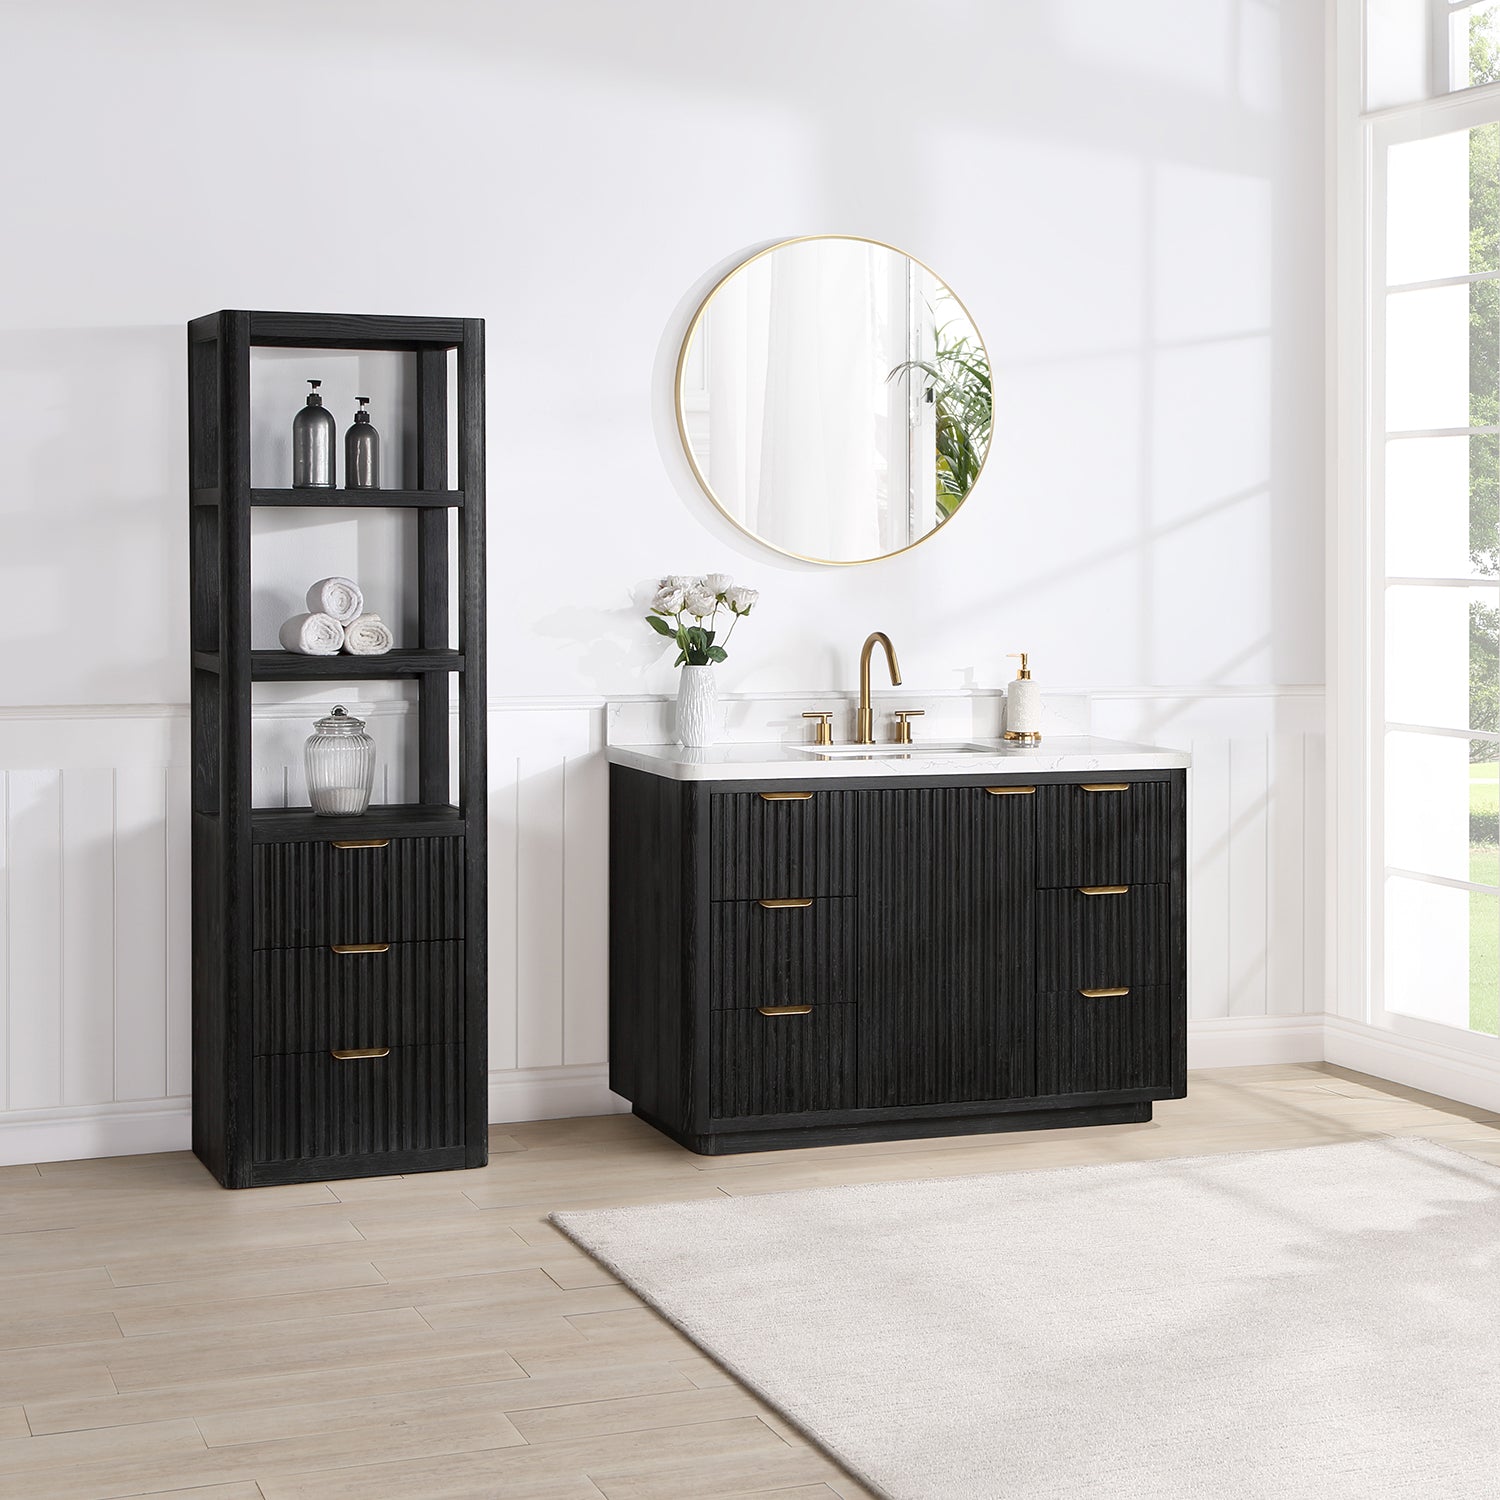 Cádiz 48in. Free-standing Single Bathroom Vanity in Fir Wood Black with Composite top in Lightning White